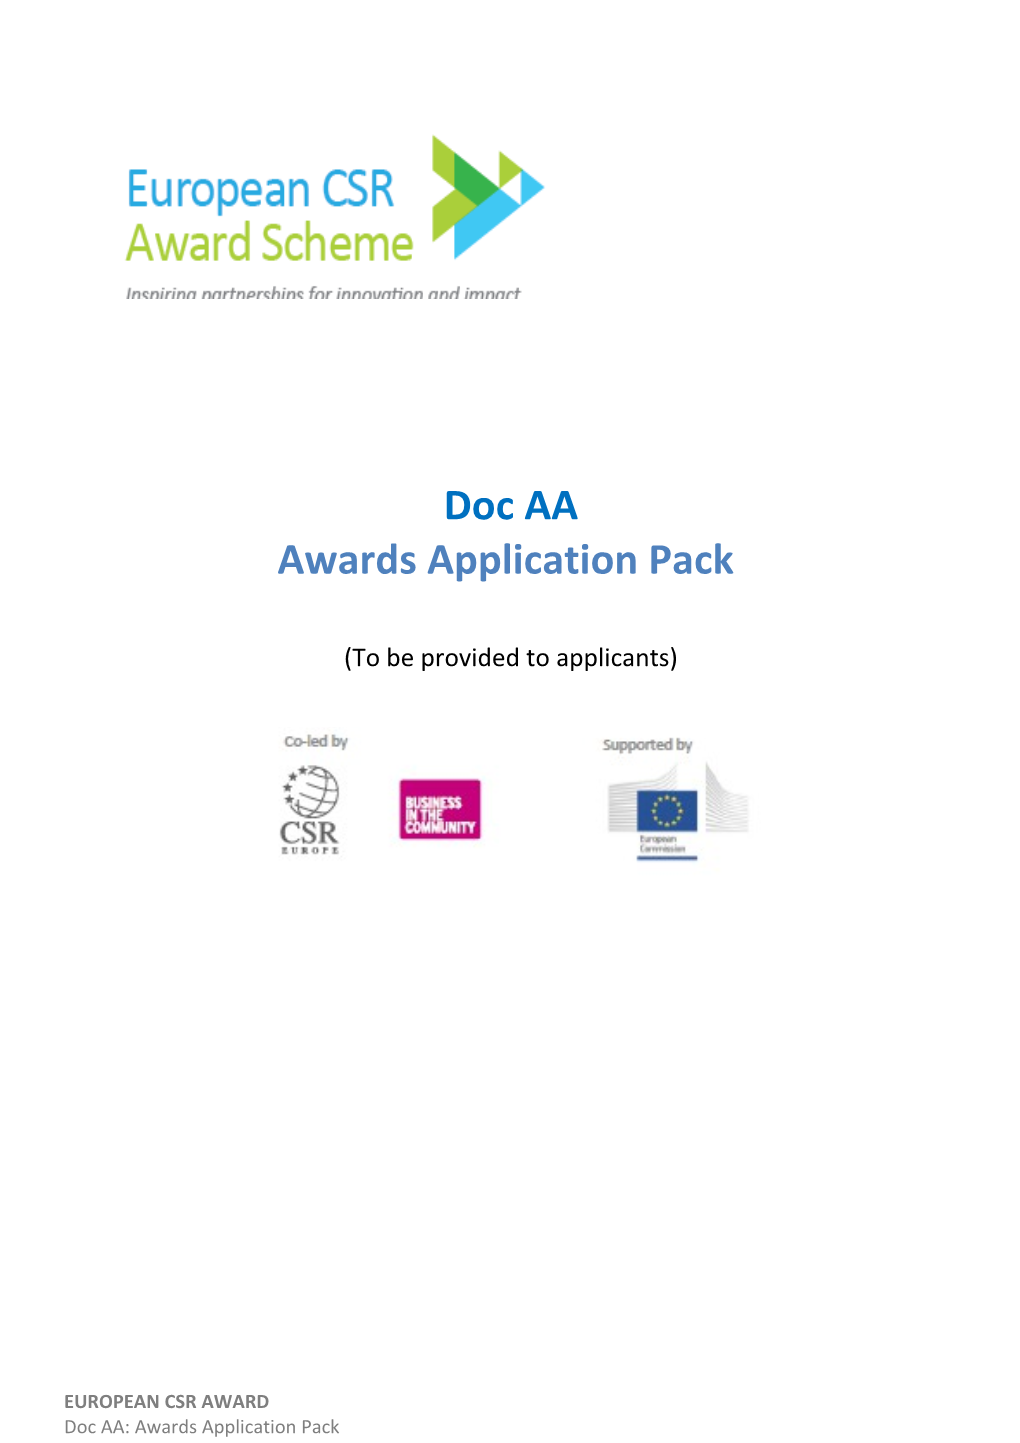 Awards Application Pack